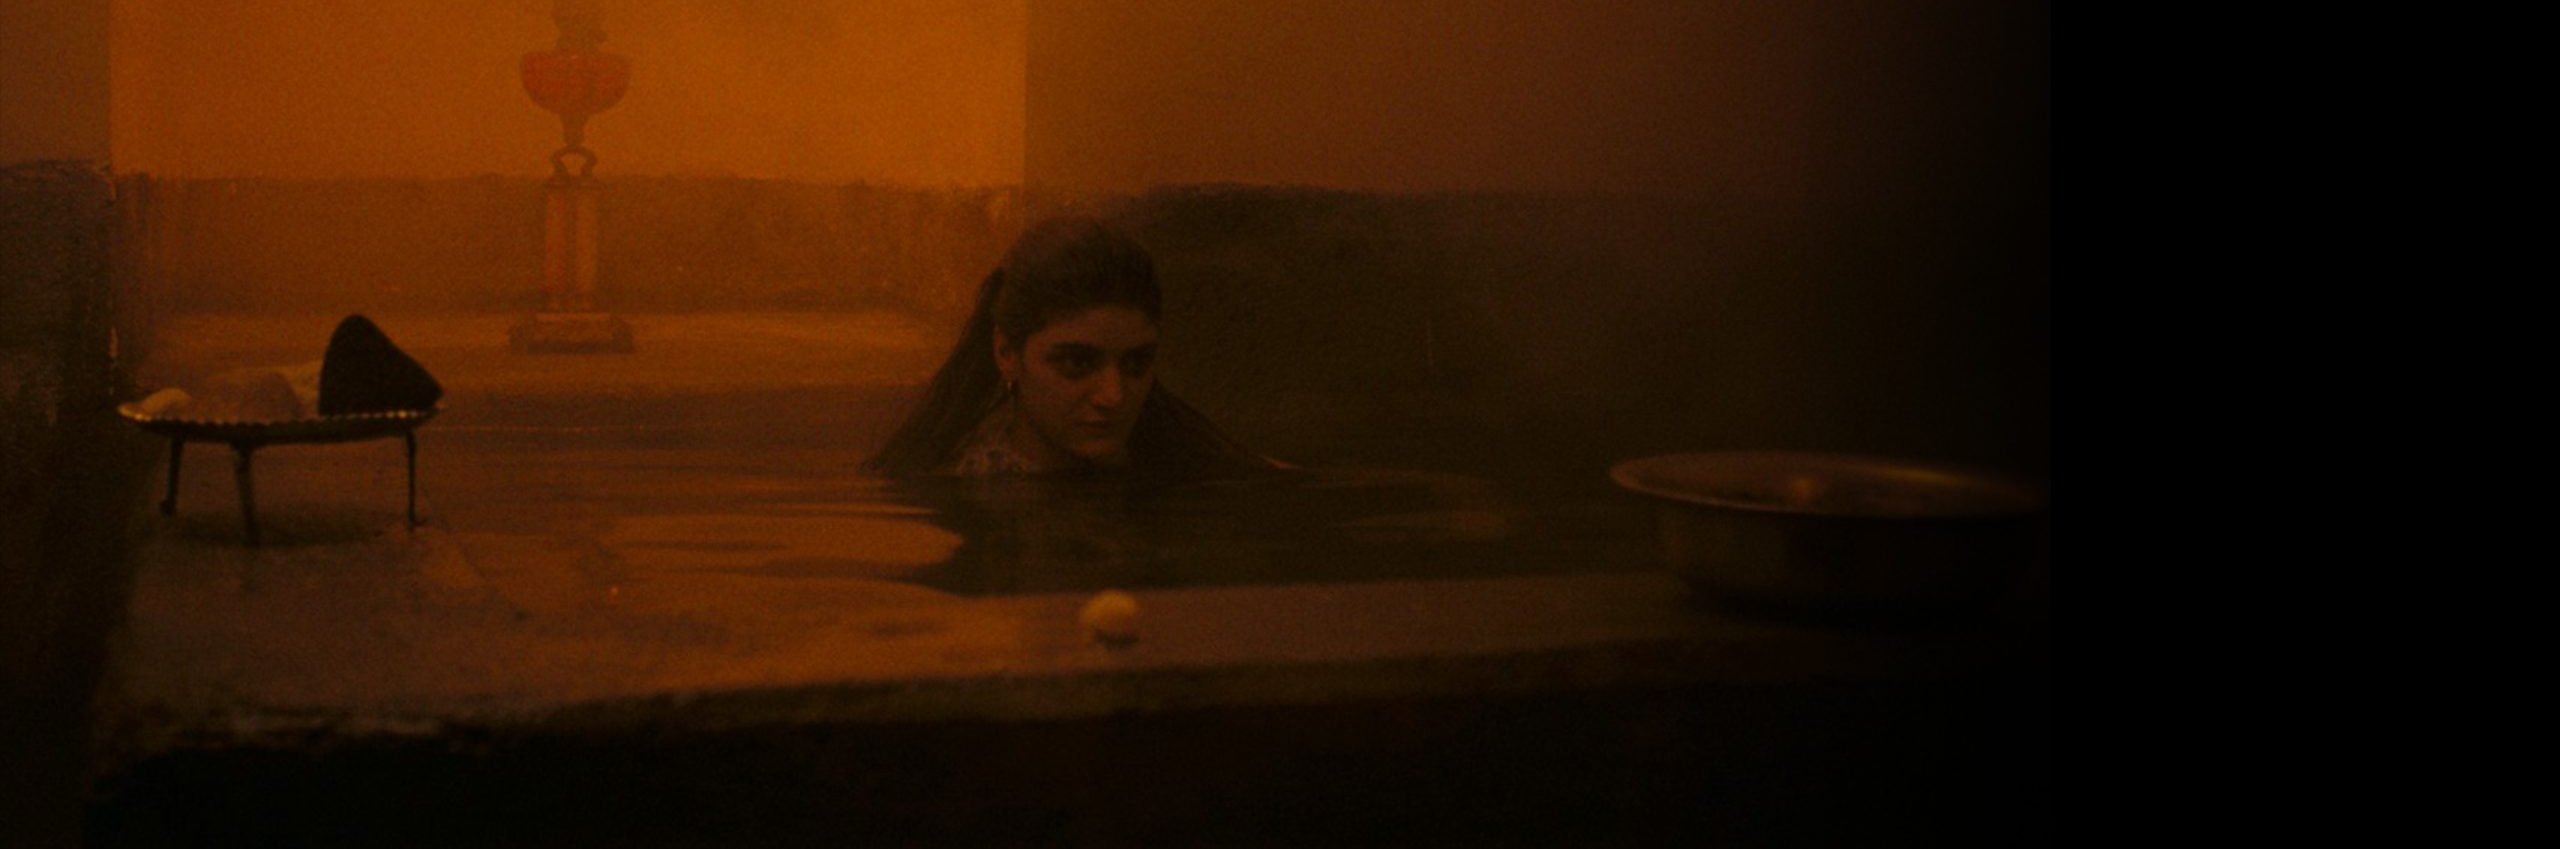 woman in water in a dark room